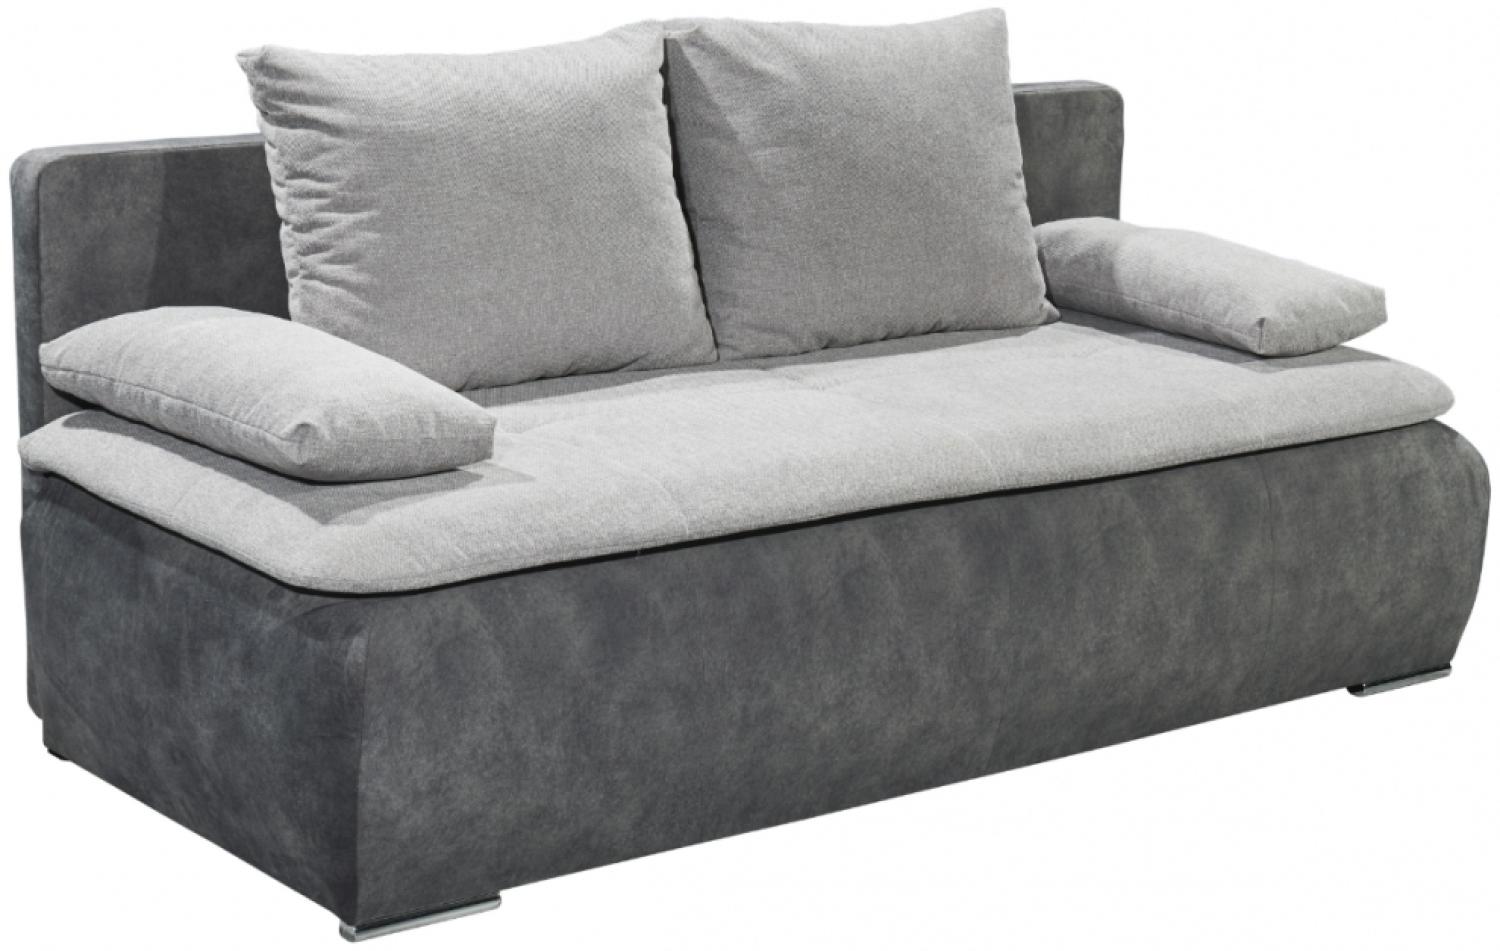 Sofa Schlafsofa Klappsofa Jugendsofa Couch inkl. Kissen ca. 208 cm breit JESSY Grau Bild 1